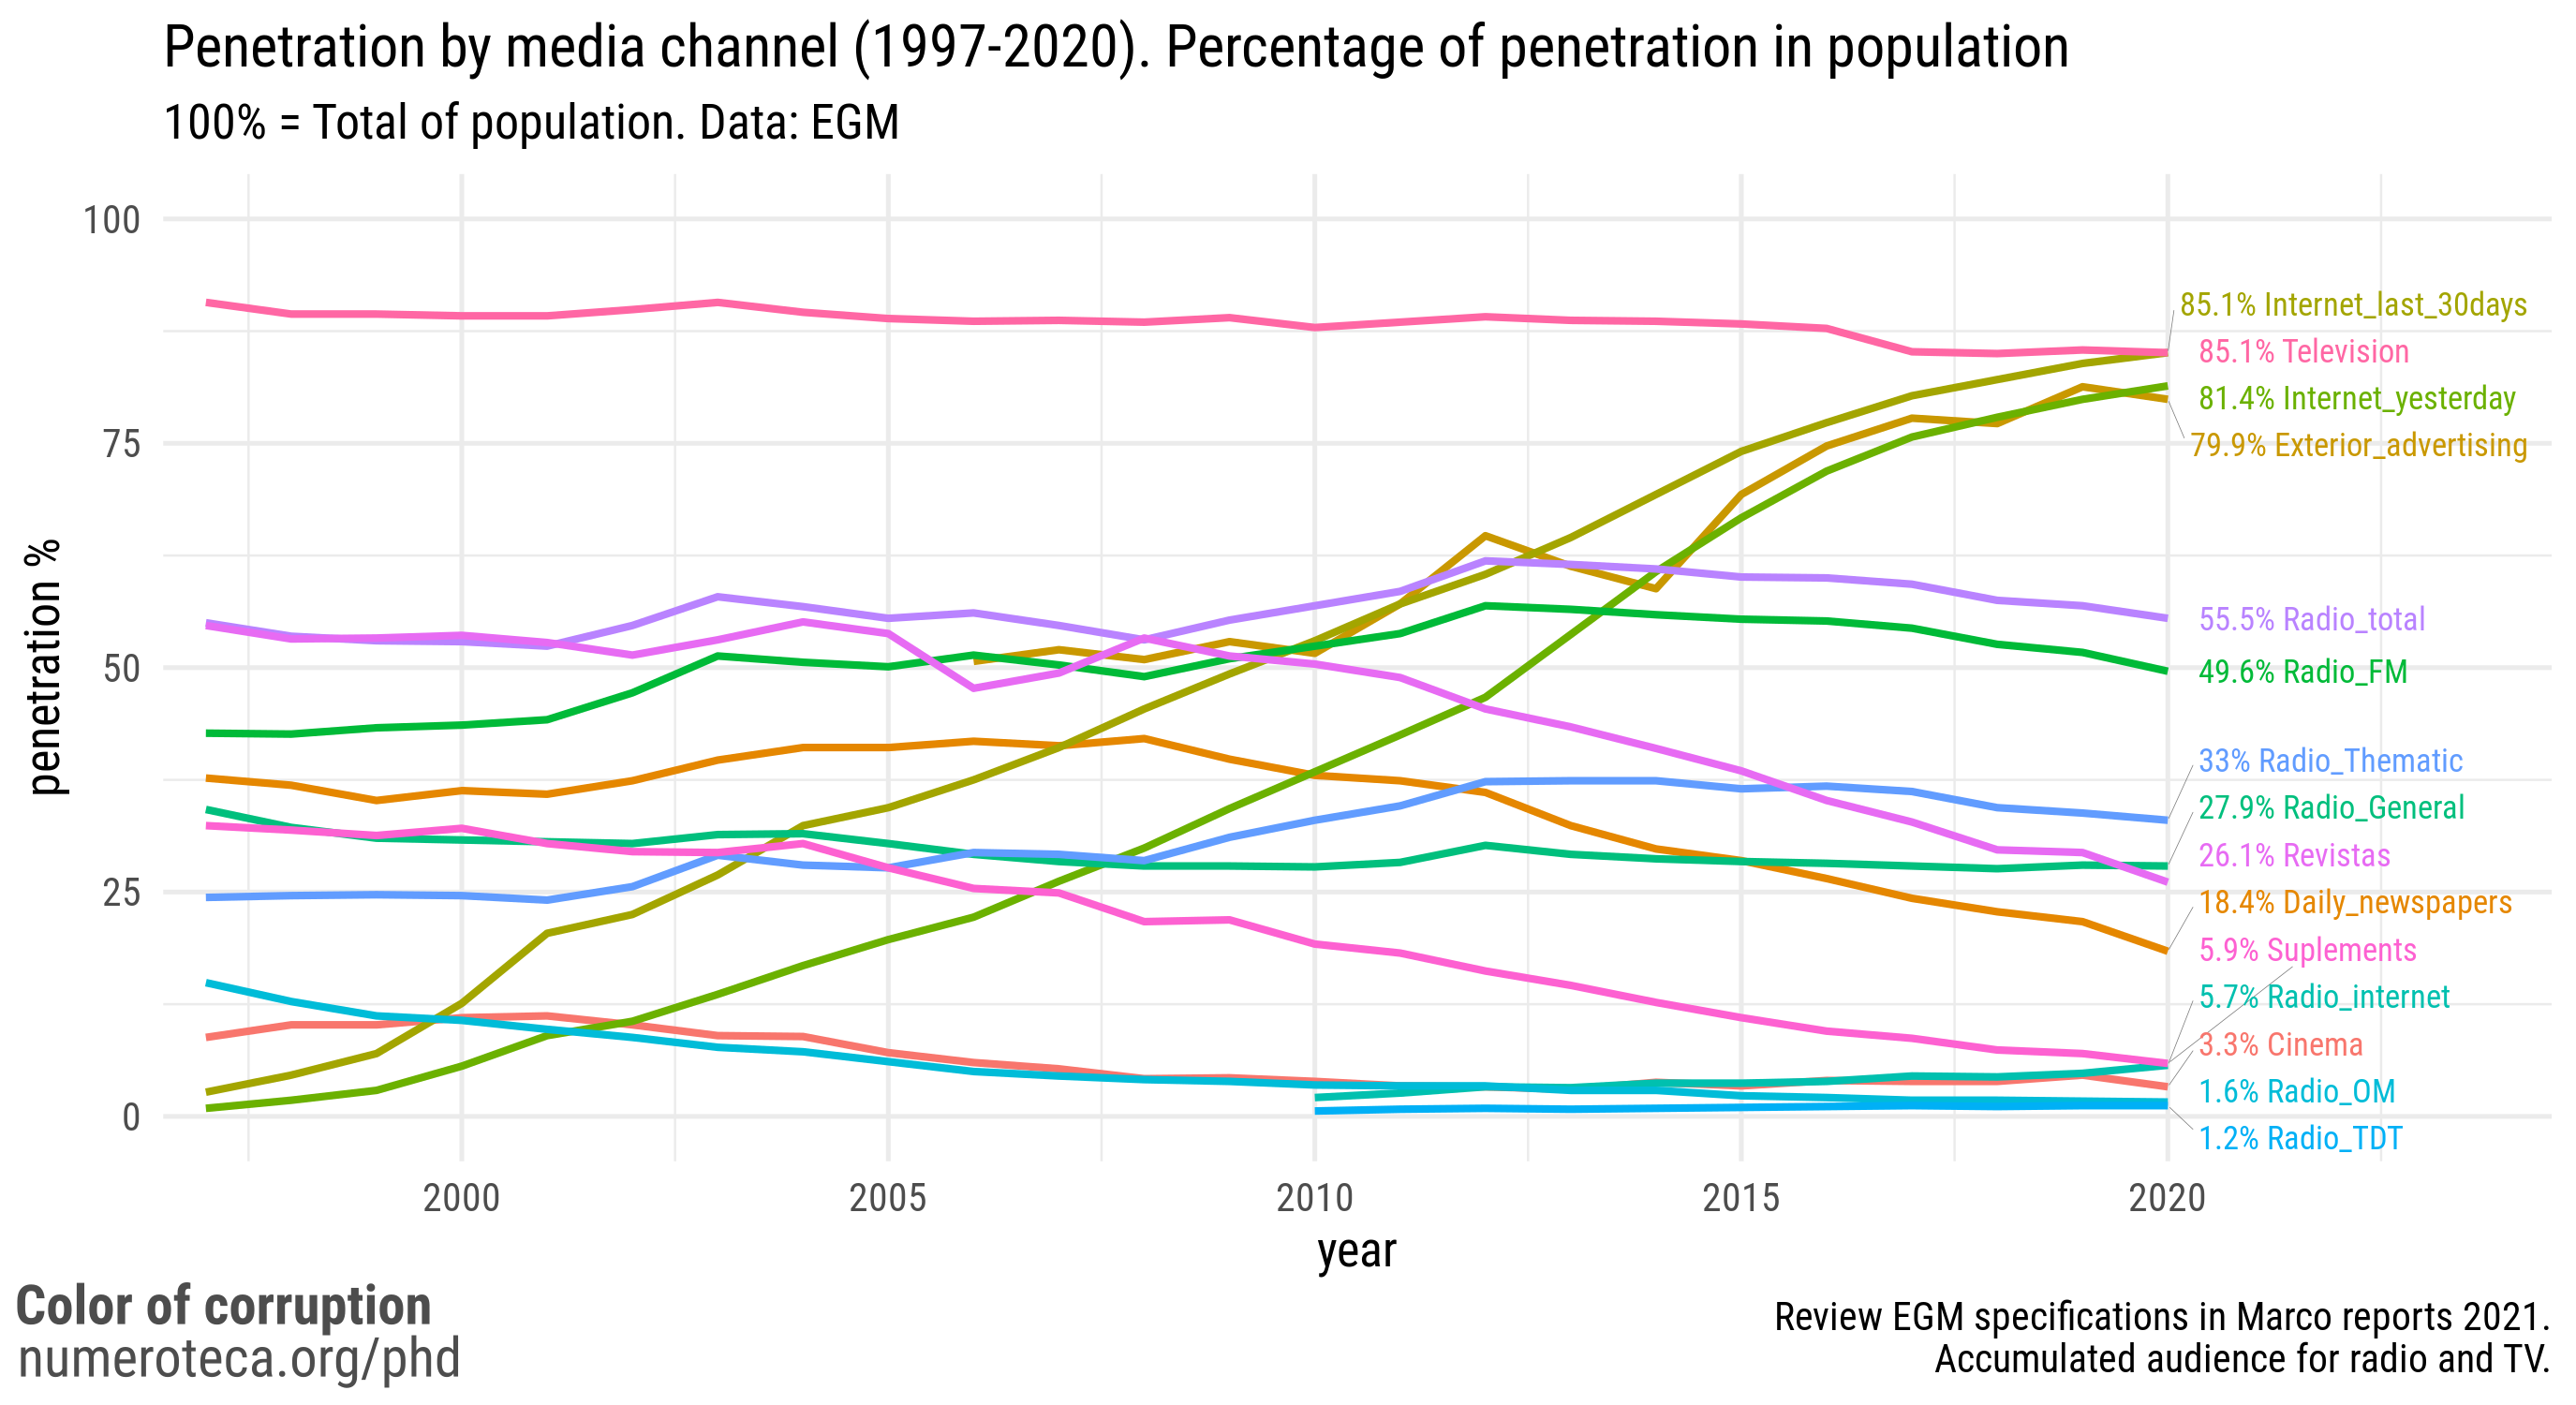 Penetration by media channel in Spain. Data: EGM (AIMC, 2021).